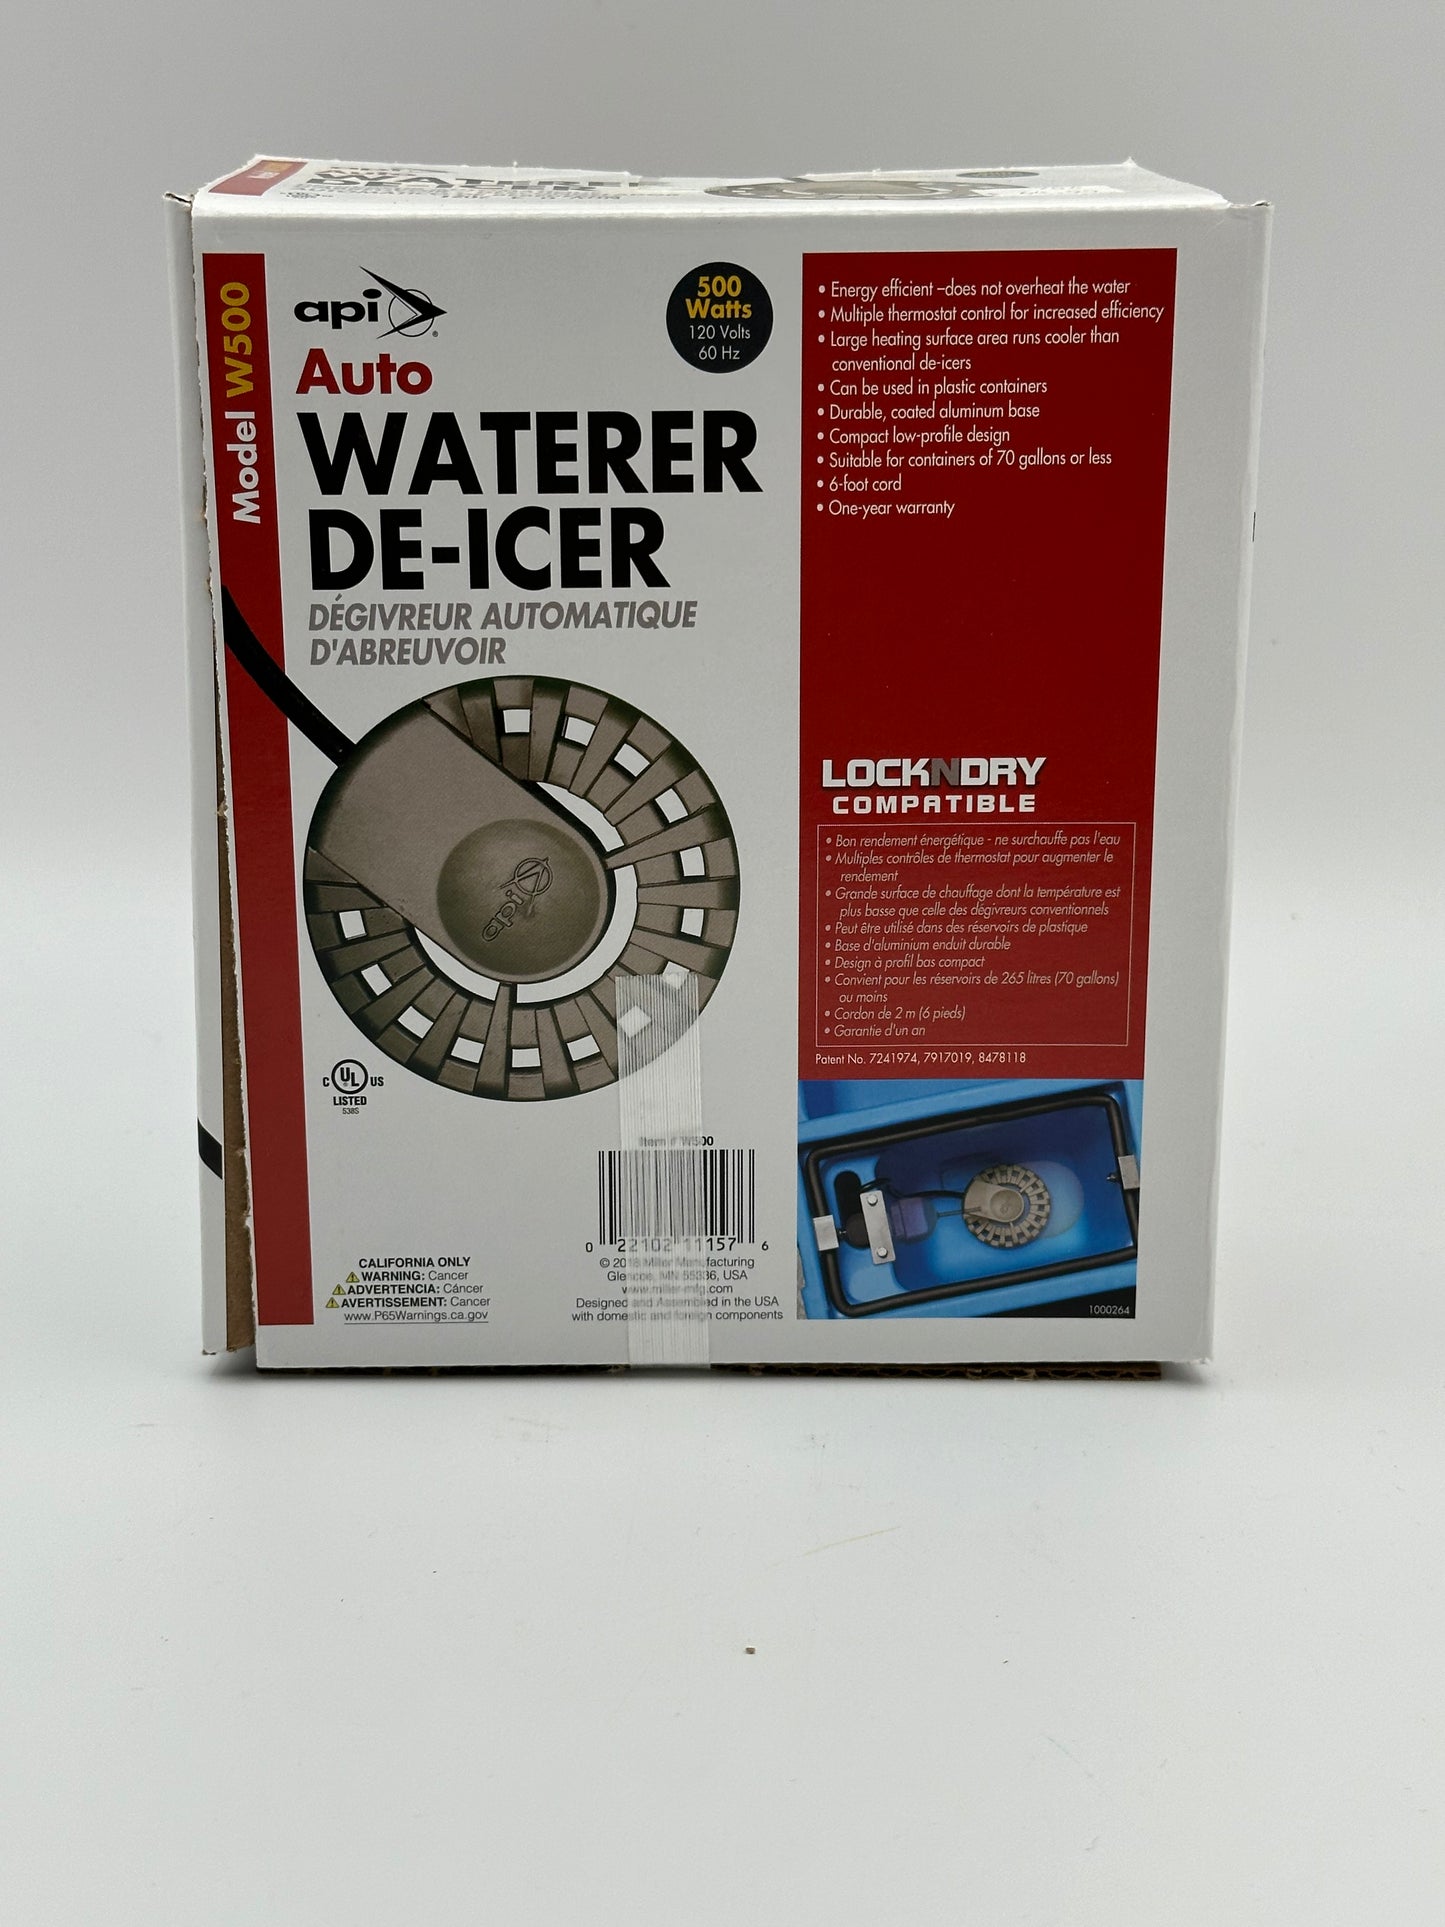 API Auto Waterer De-Icer - 500 Watt